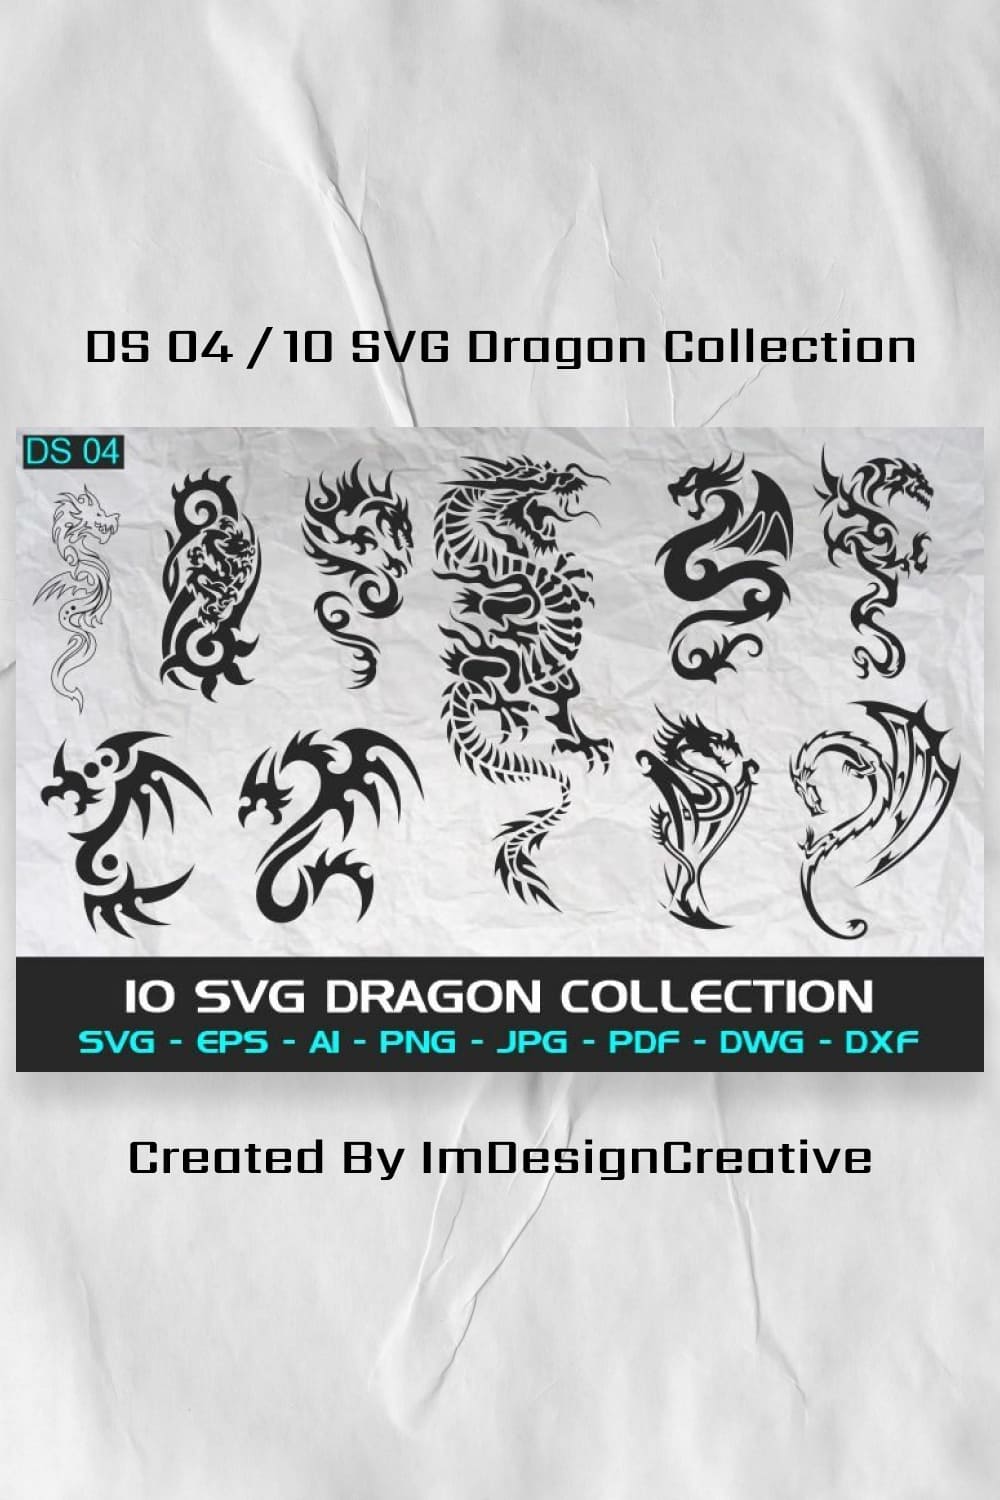 ds 04 10 svg dragon collection pinterest image.